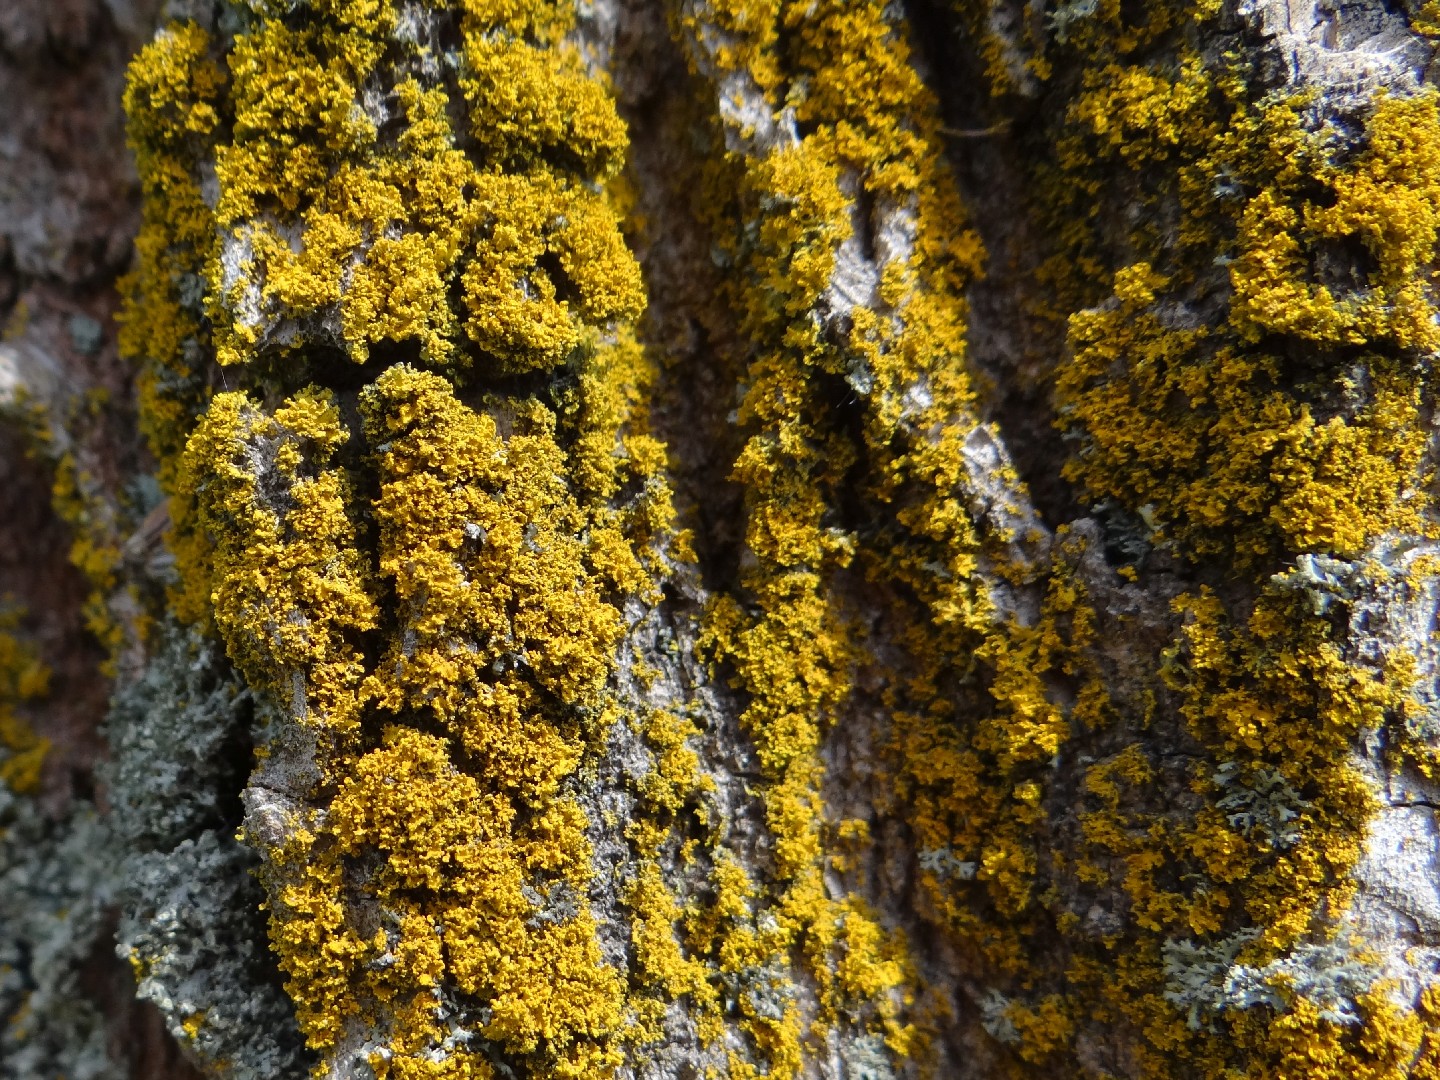 Candleflame lichen